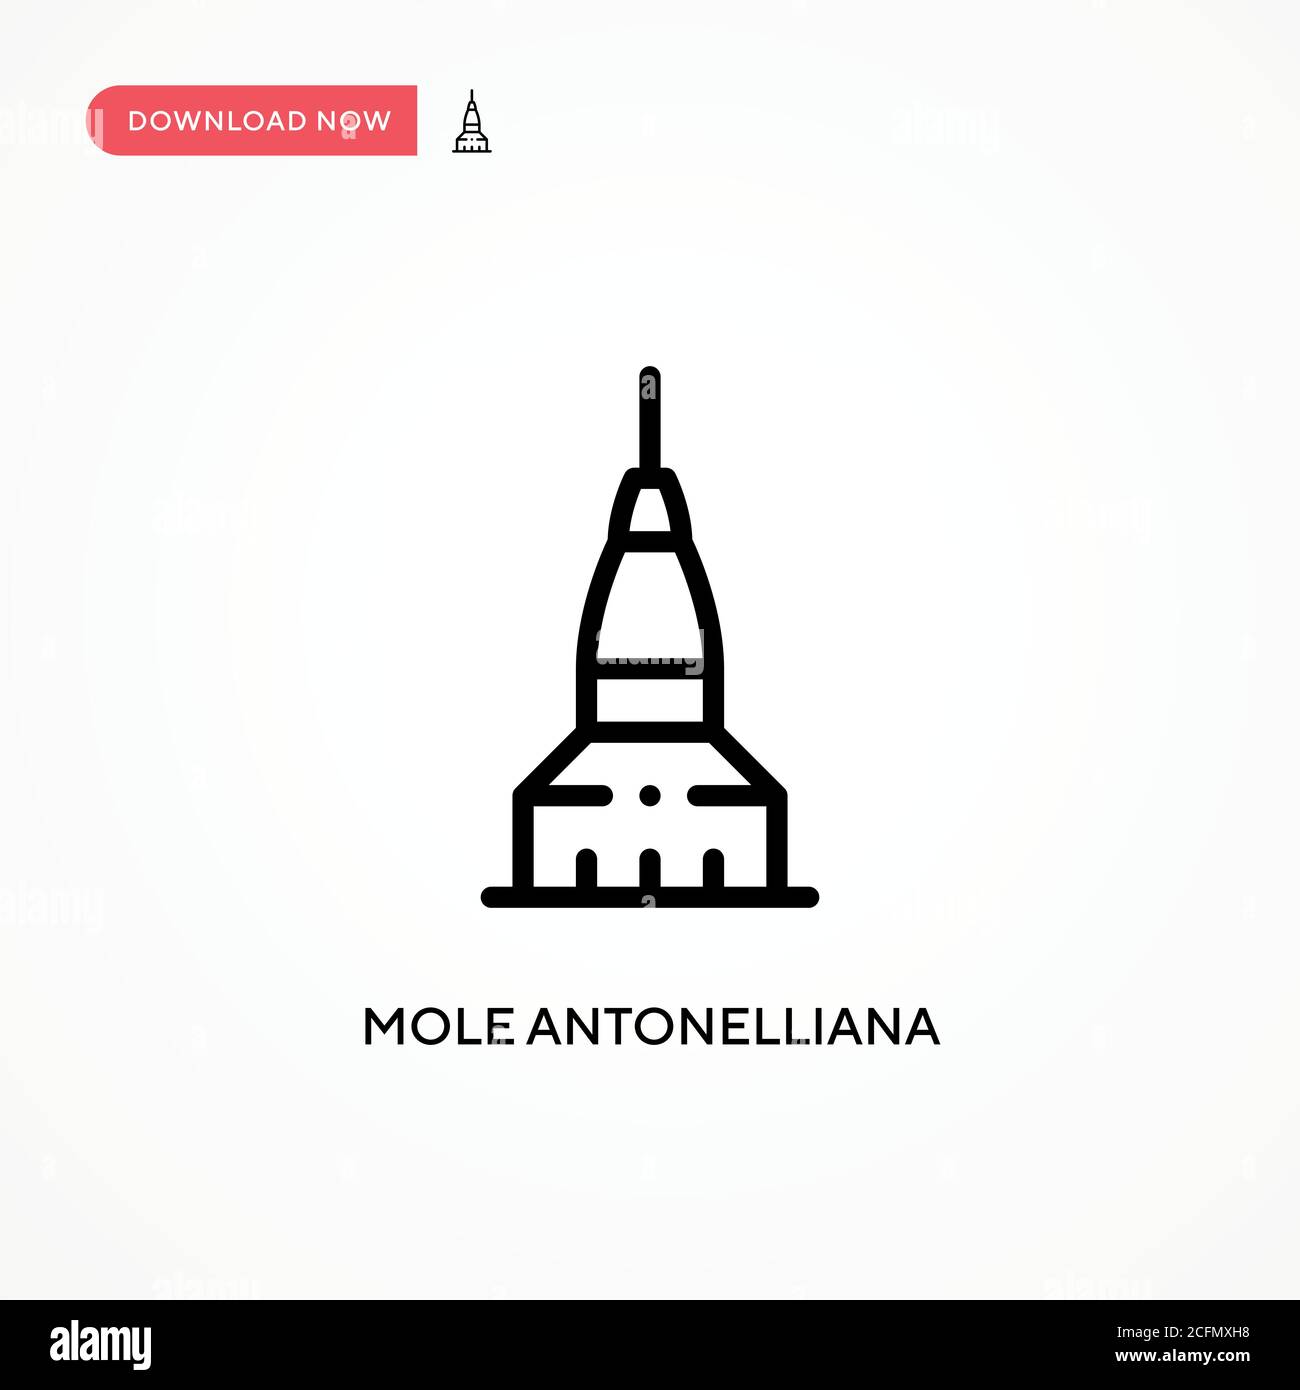 Mole antonelliana vector icon. Modern, simple flat vector illustration for web site or mobile app Stock Vector